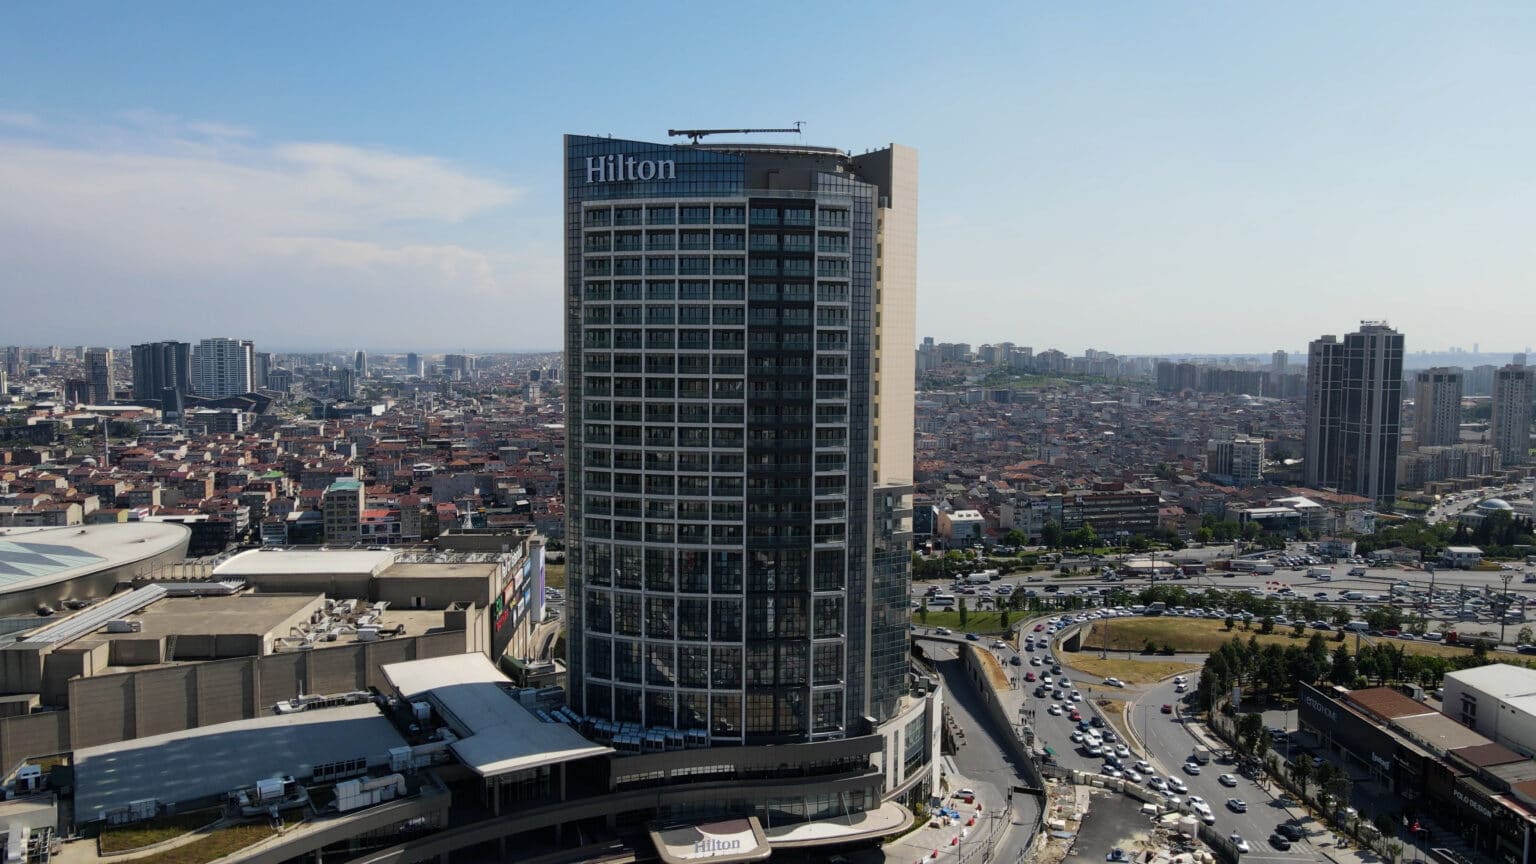 Hilton branded large apartments